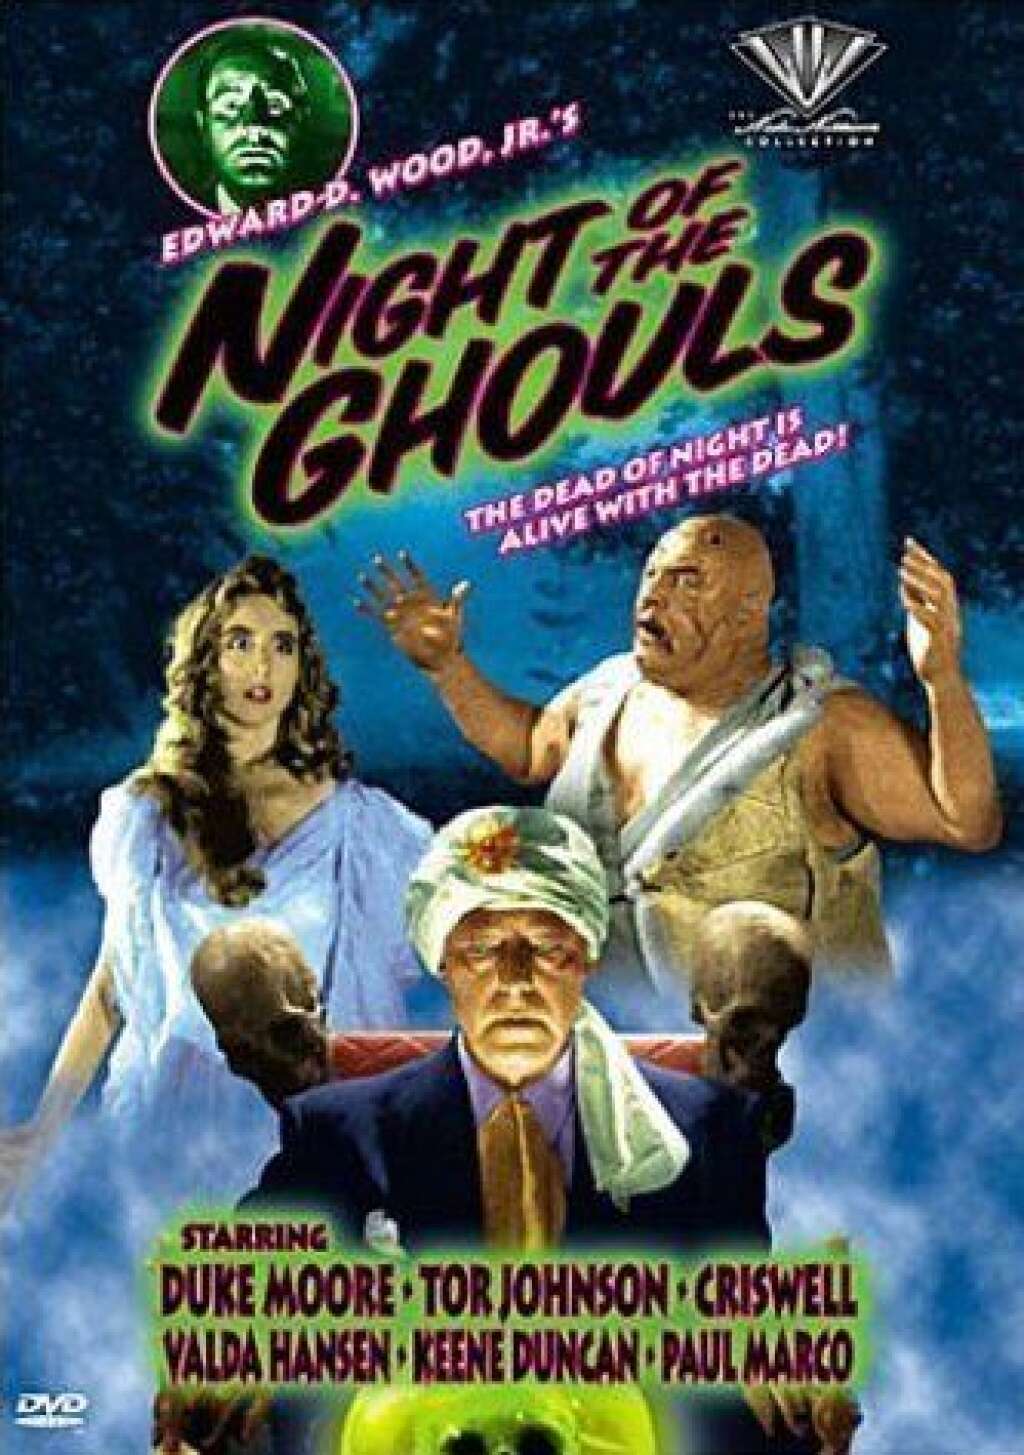 Le zombie Ed Wood: Night of the Ghouls (1959) - Par Ed Wood avec Kenne Duncan, Duke Moore, Tor Johnson